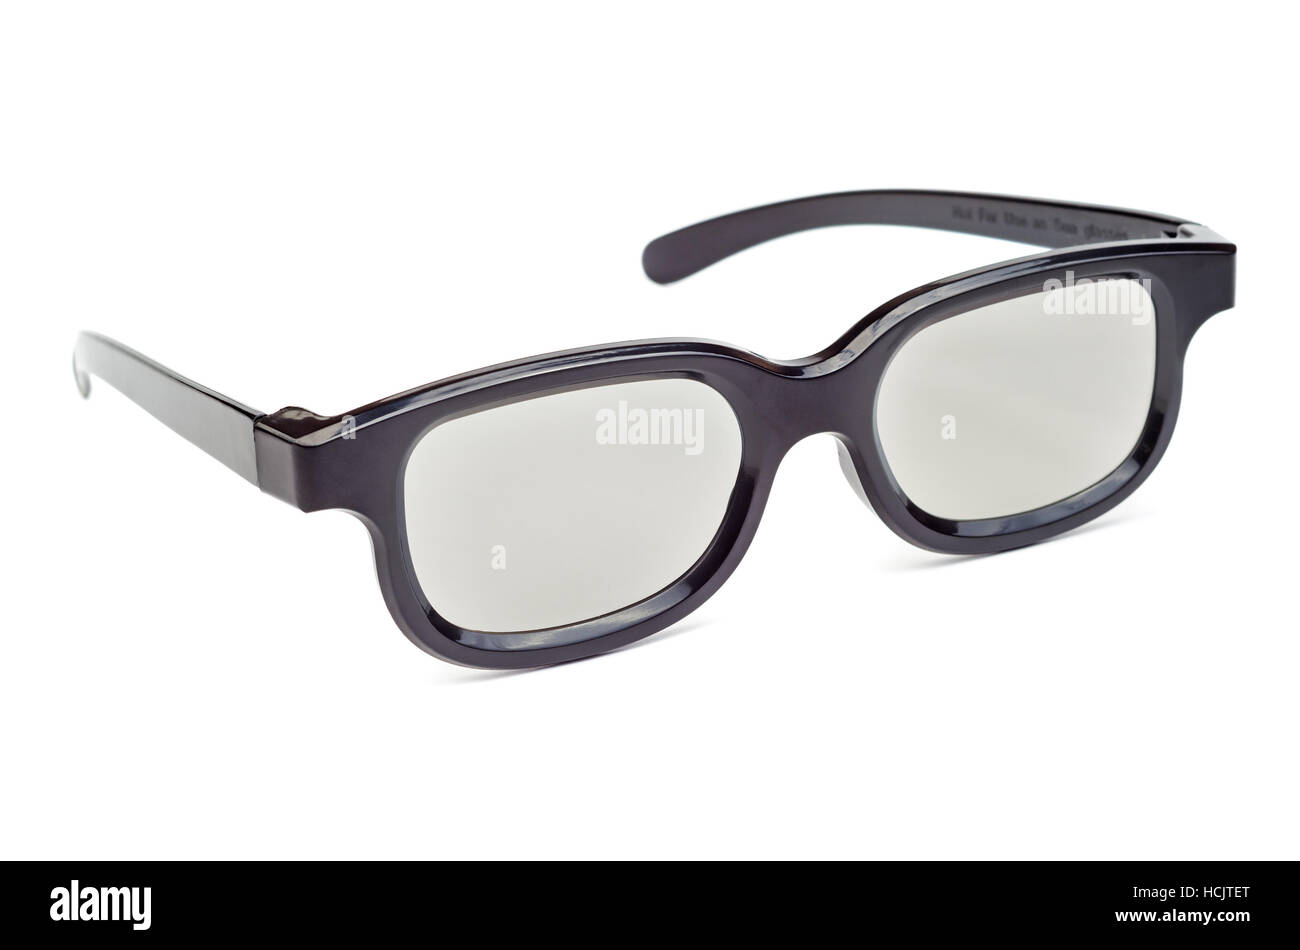 3d glasses for cinema isolated on white background. Black. Stock Photo